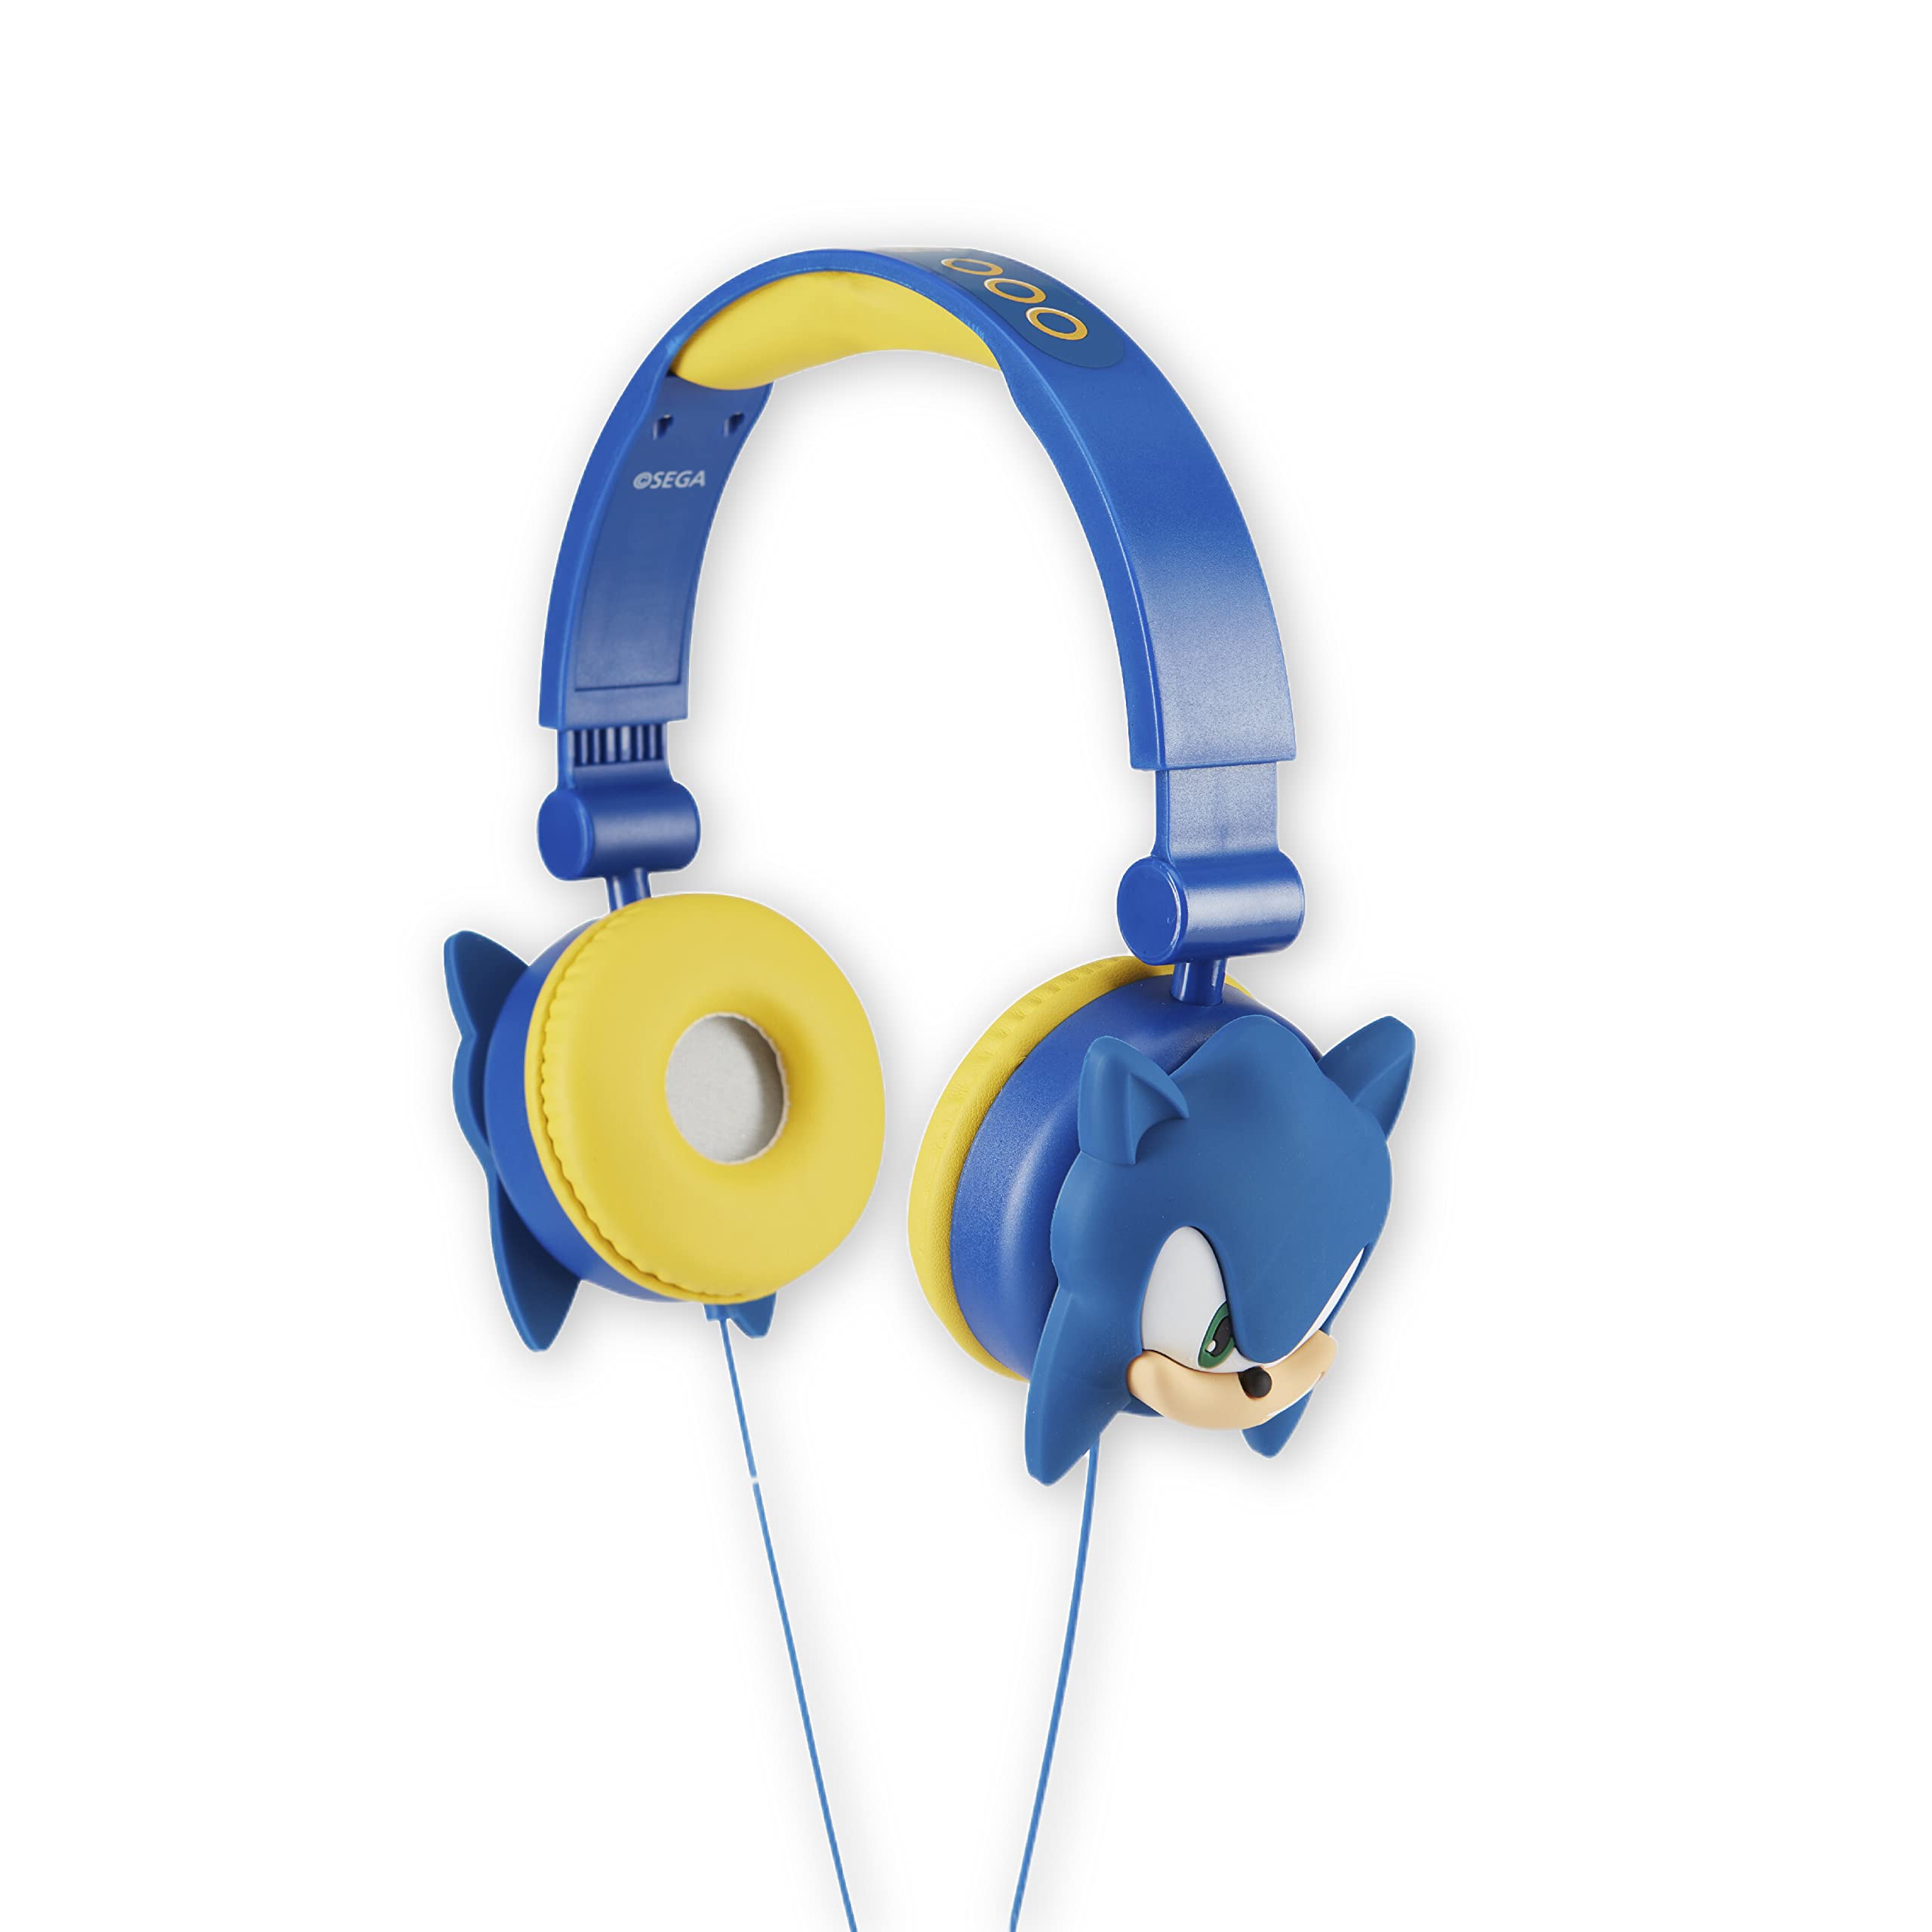 Sakar Sonic The Hedgehog 儿童头戴式耳机 - 可调节头带、立体声、防缠结线缆、音量控制...